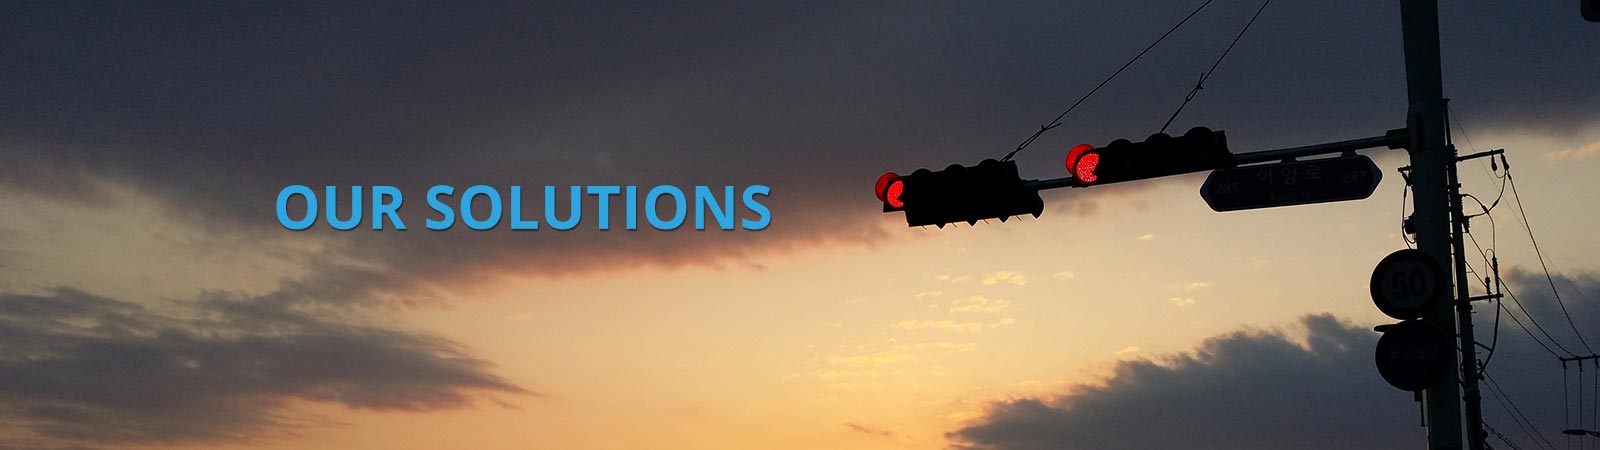 traffic signal lights manufacturers | led traffic light | solar traffic light